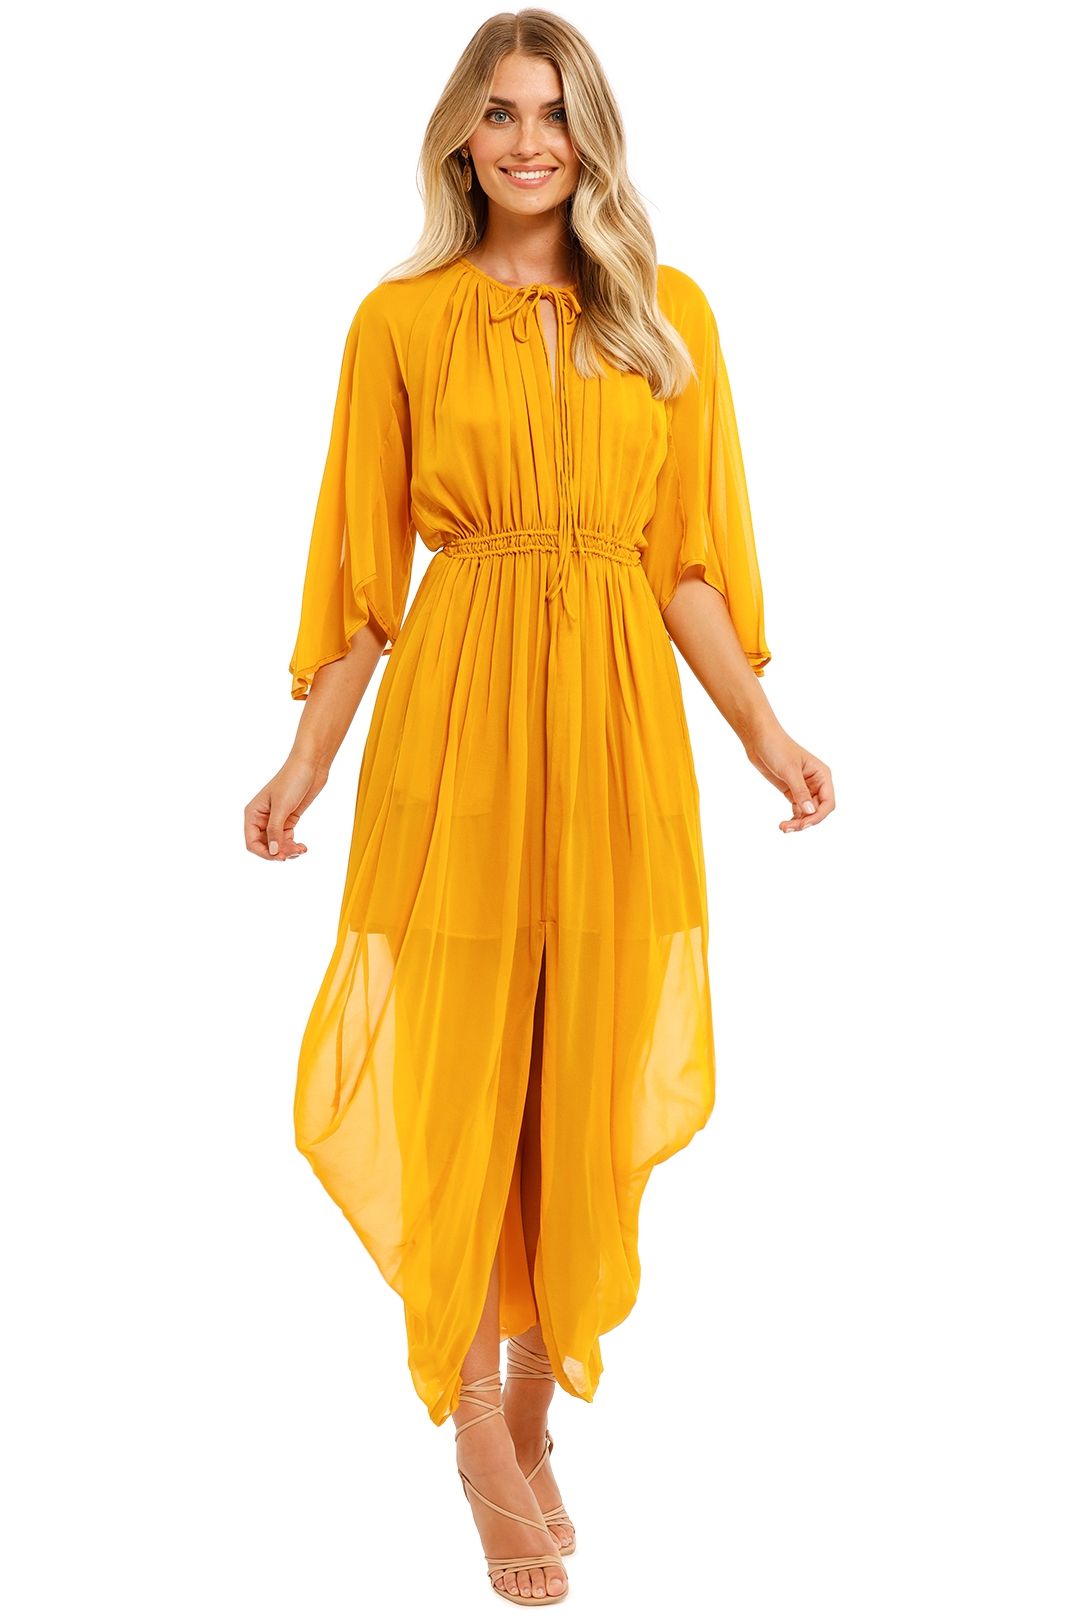 KITX Shell Drape Dress Marigold